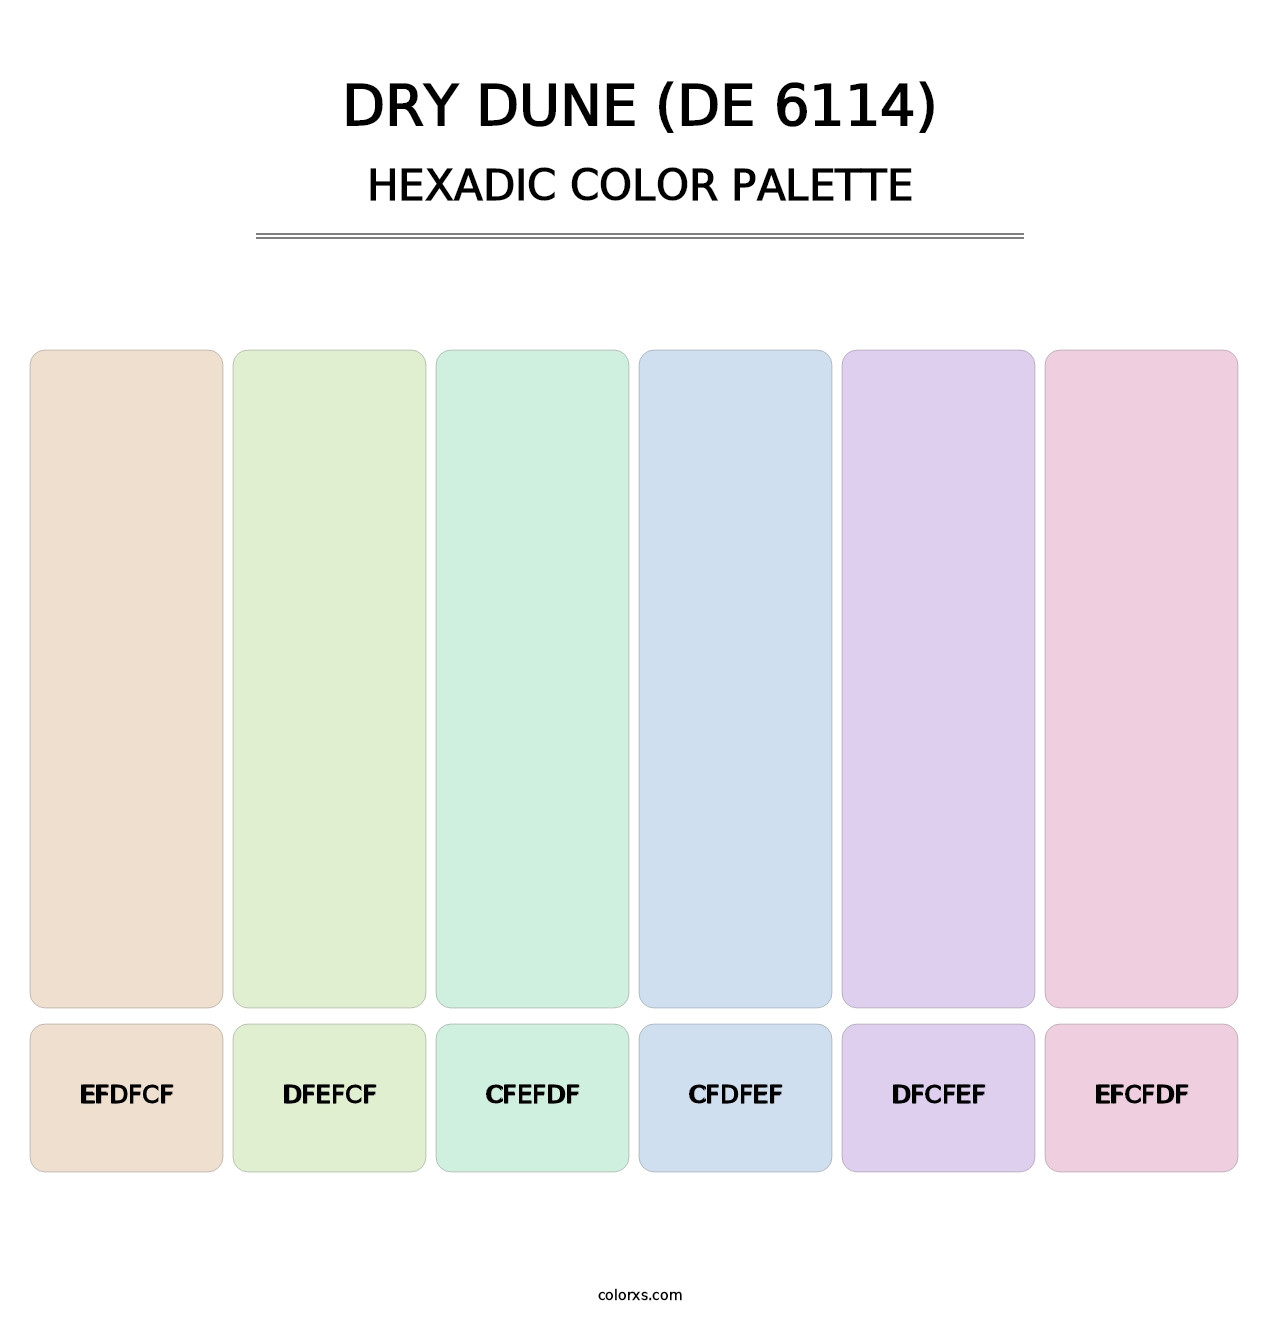 Dry Dune (DE 6114) - Hexadic Color Palette